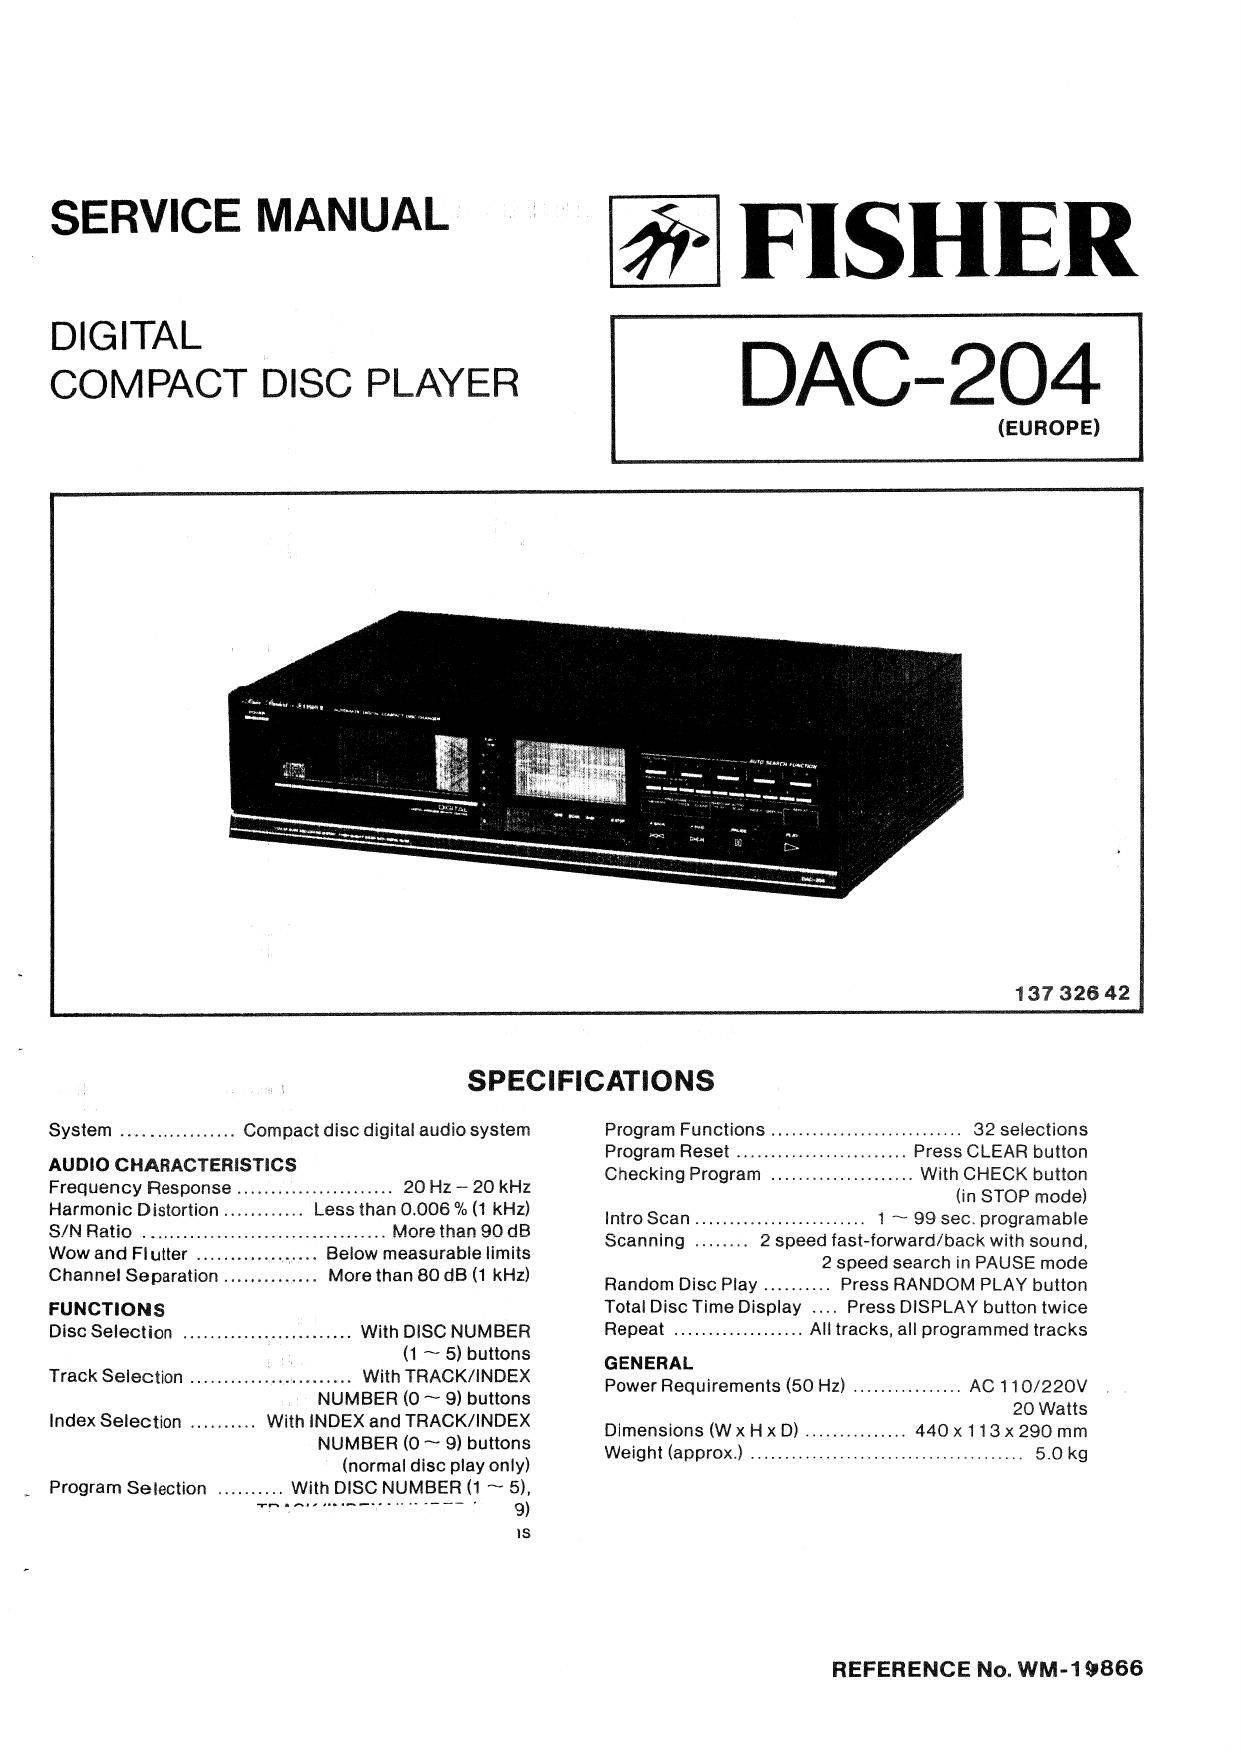 Fisher DAC-204